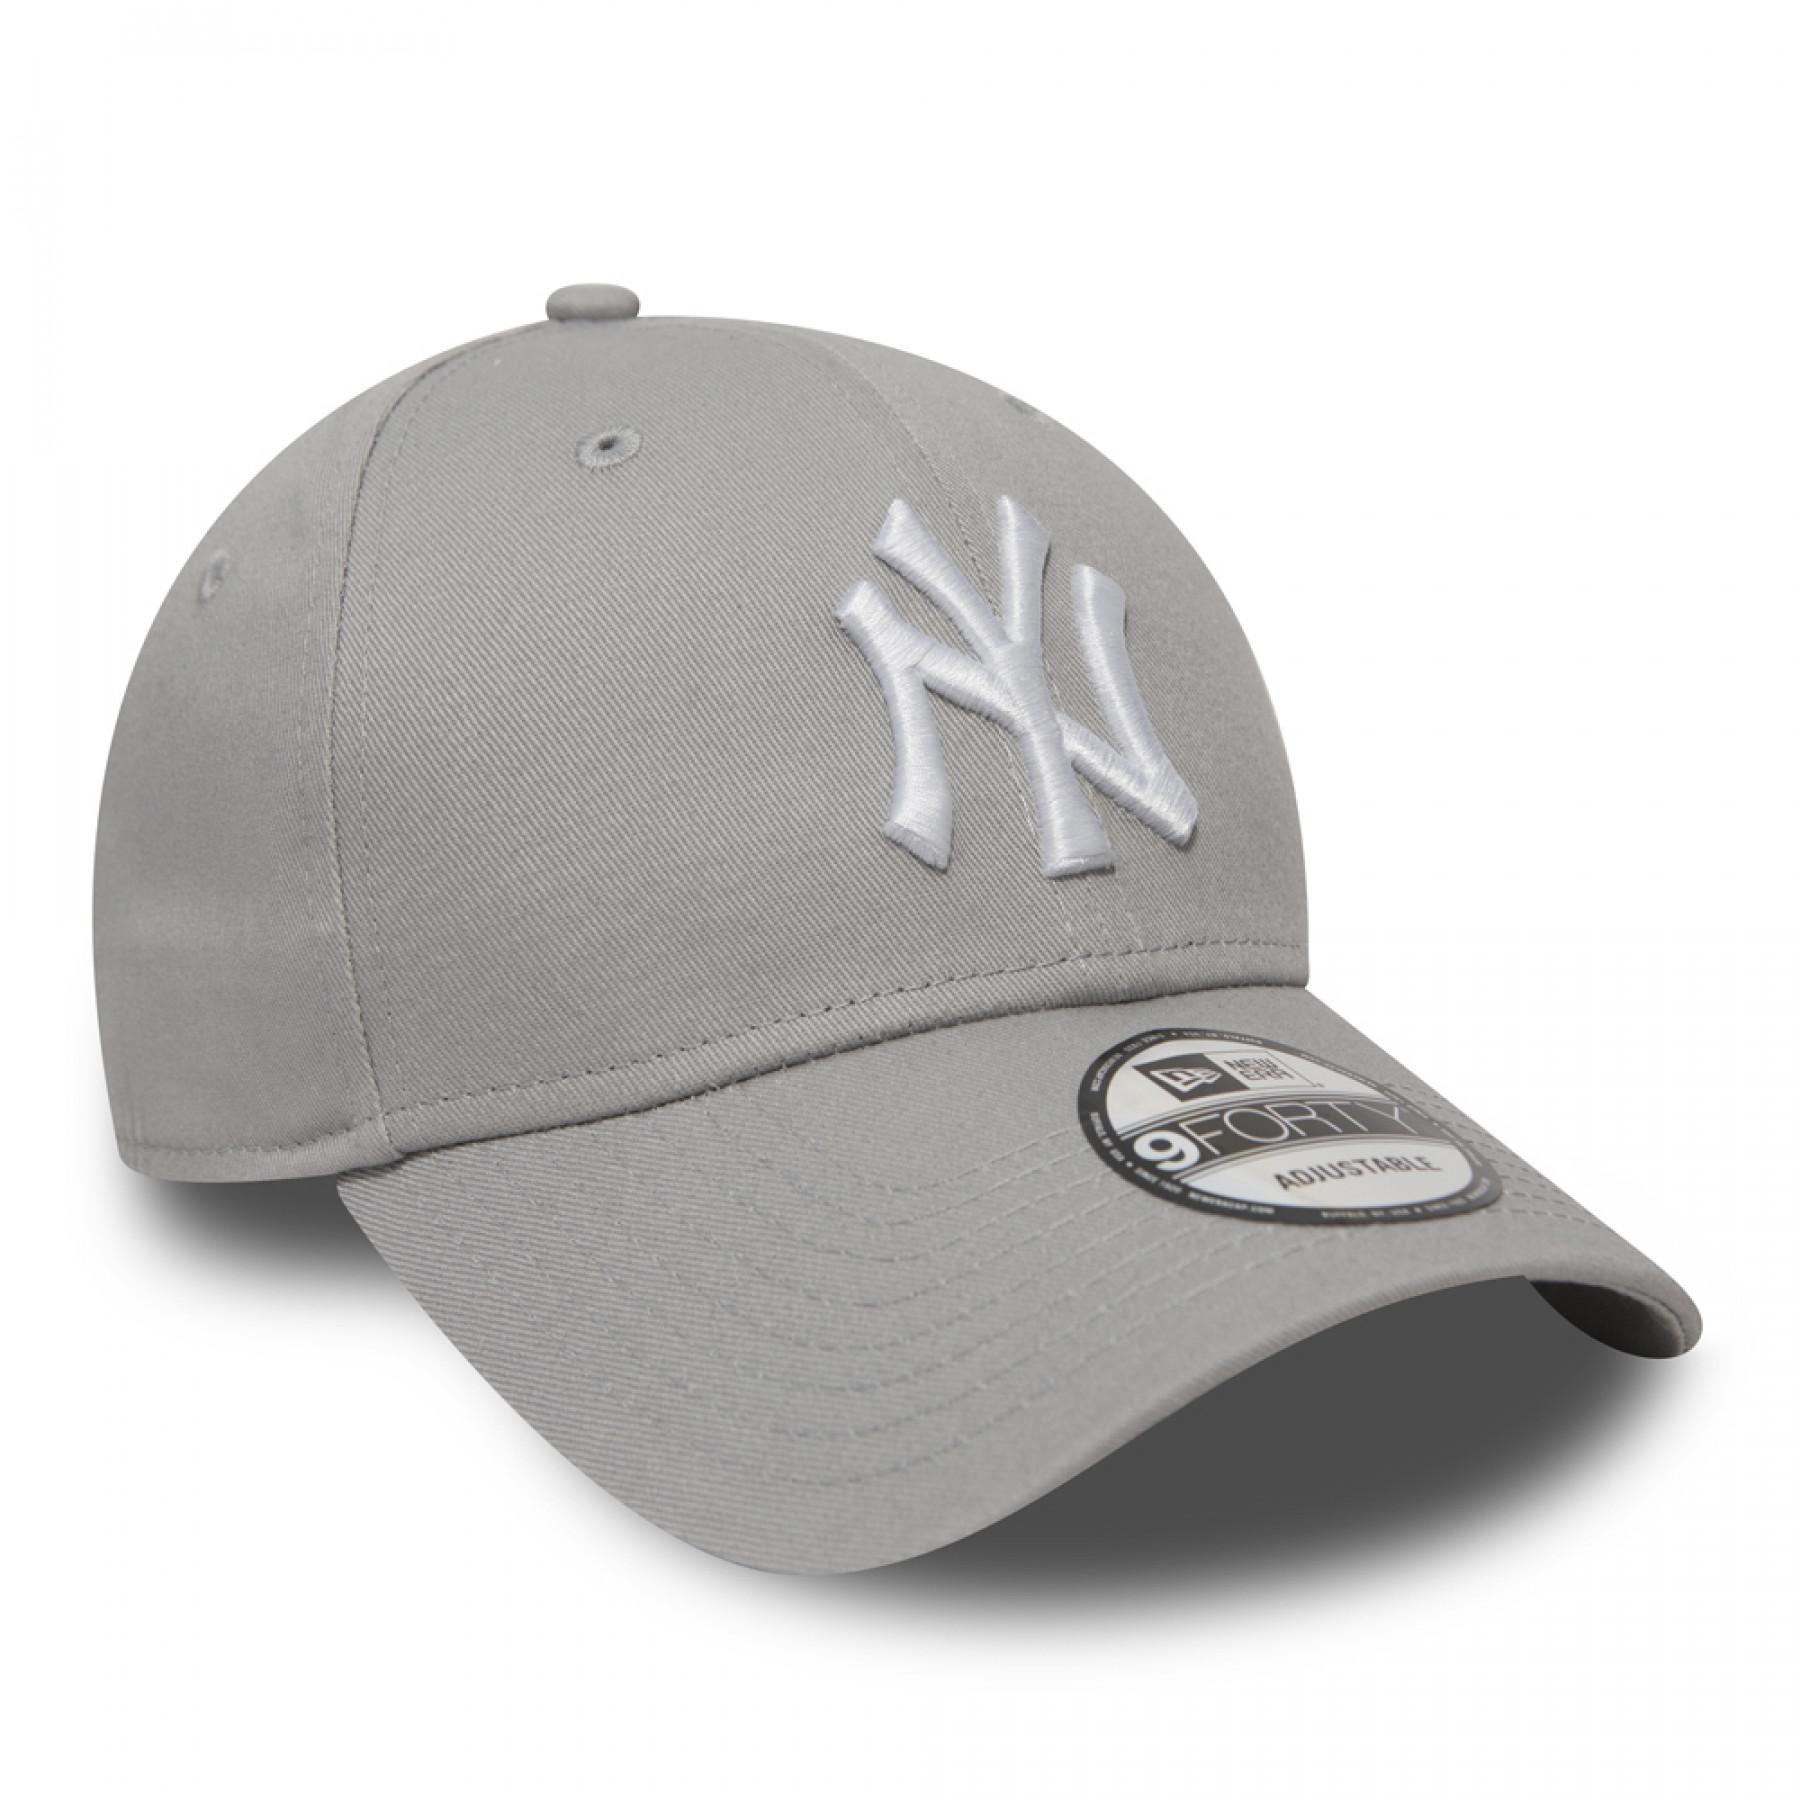 Kapsyl New Era essential 9forty New York Yankees